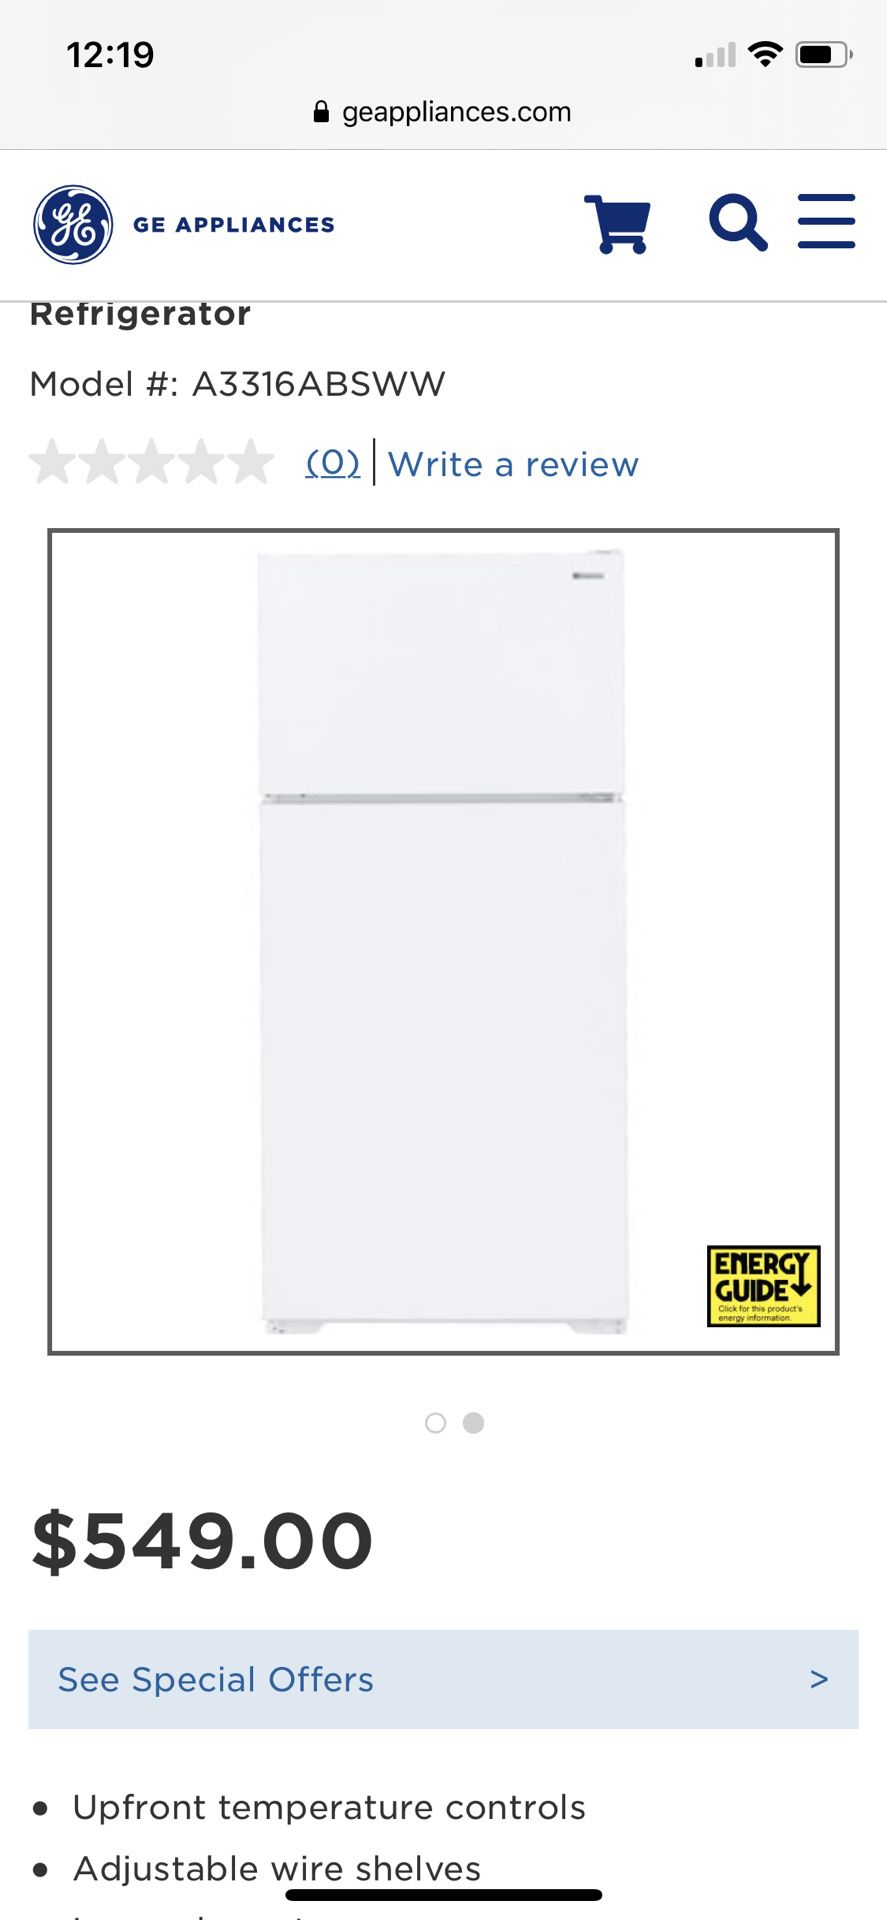 Top Freezer Refrigerator- GE Appliances